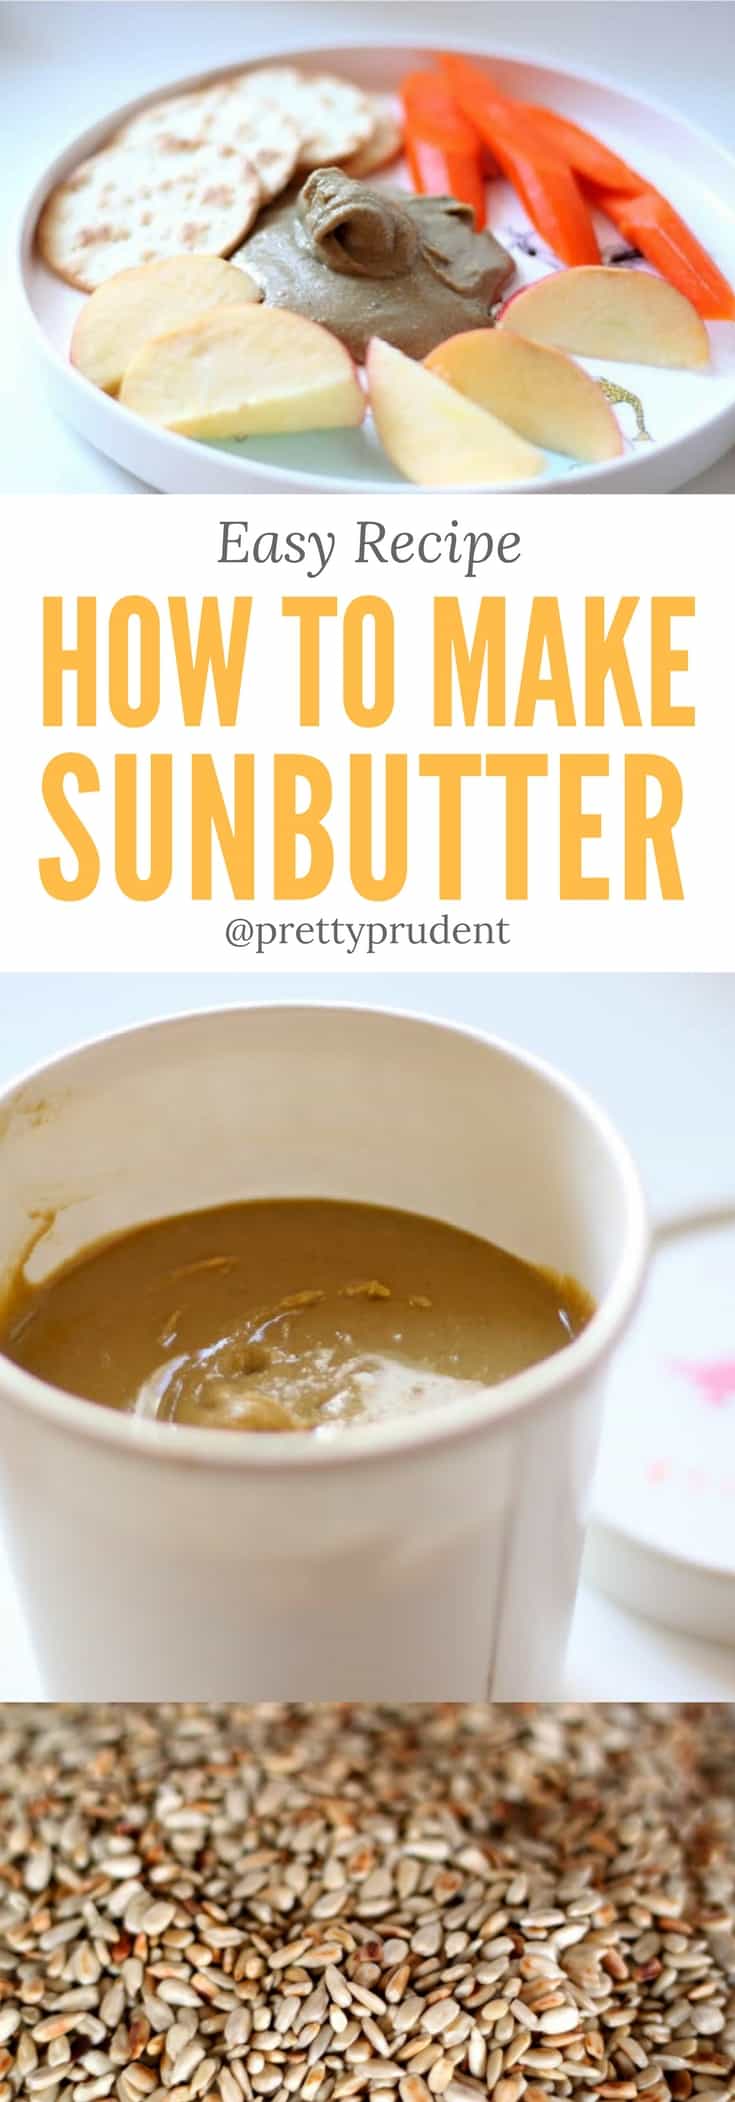 How to Make Sunbutter